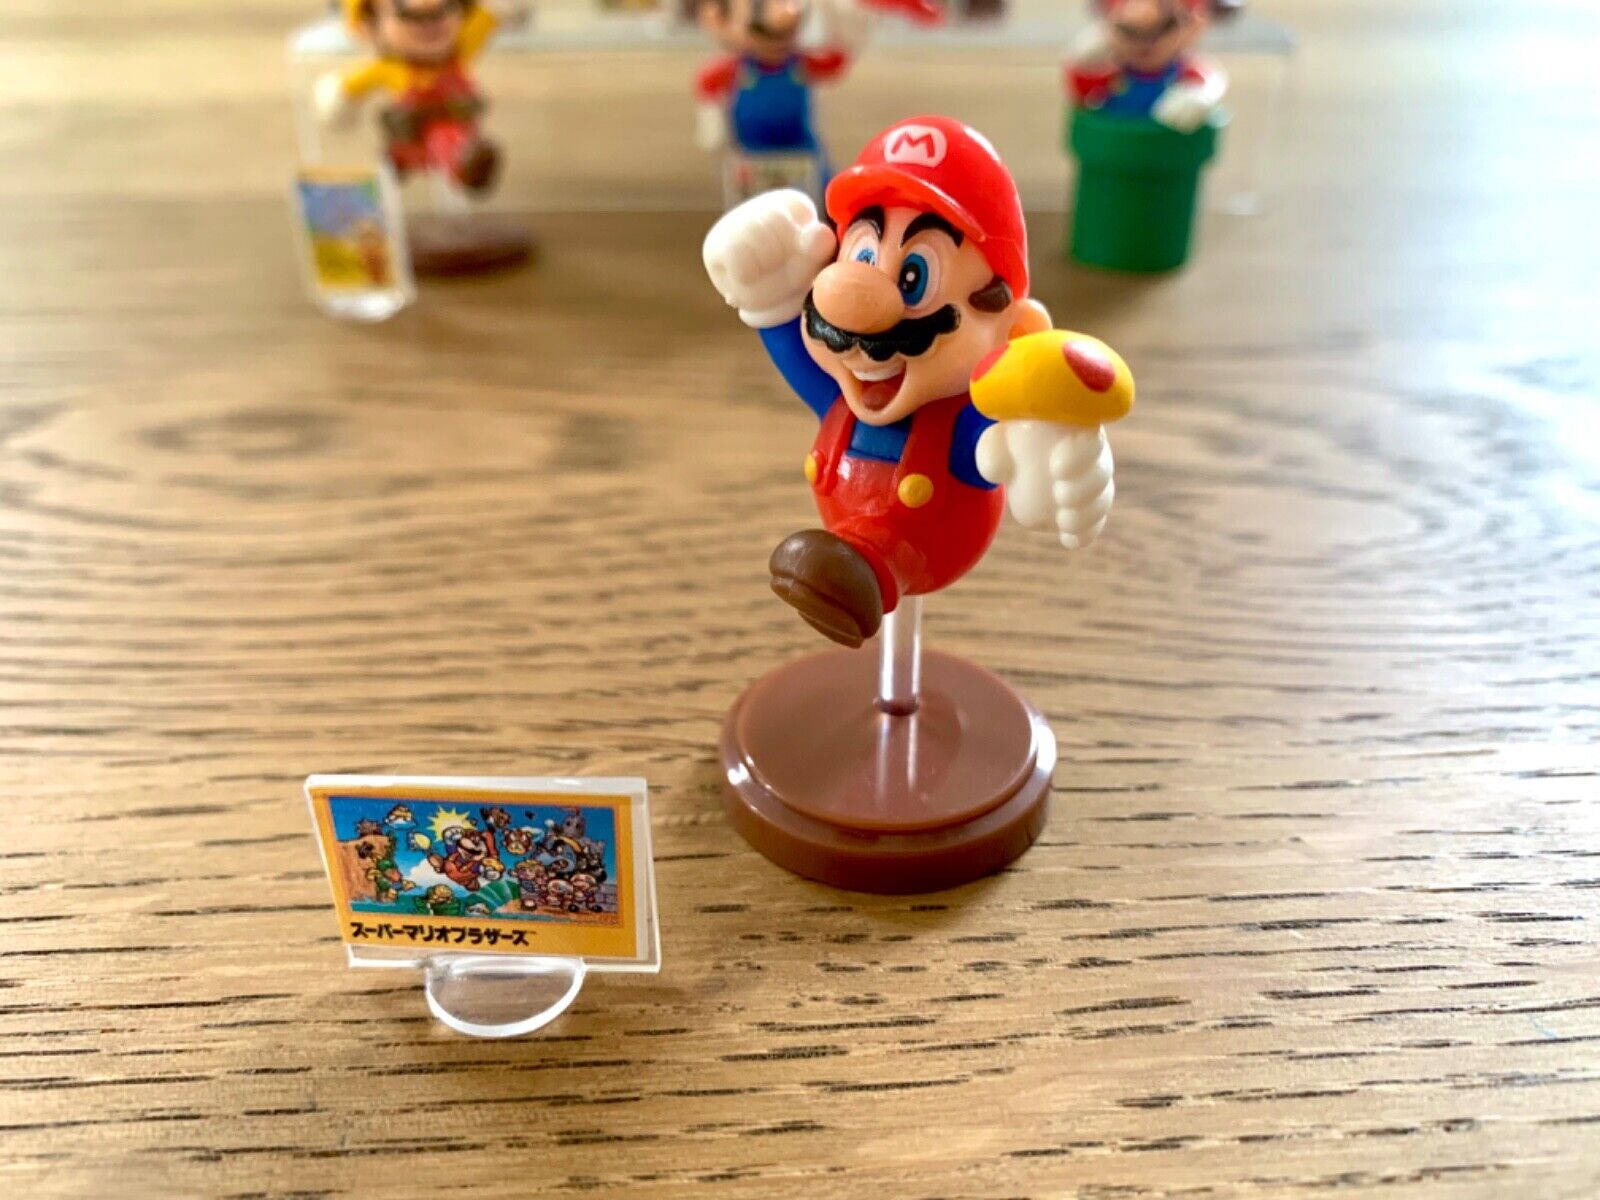 Super Mario Figure ChocoEgg Furuta History Collection Nintendo 2020 from Japan